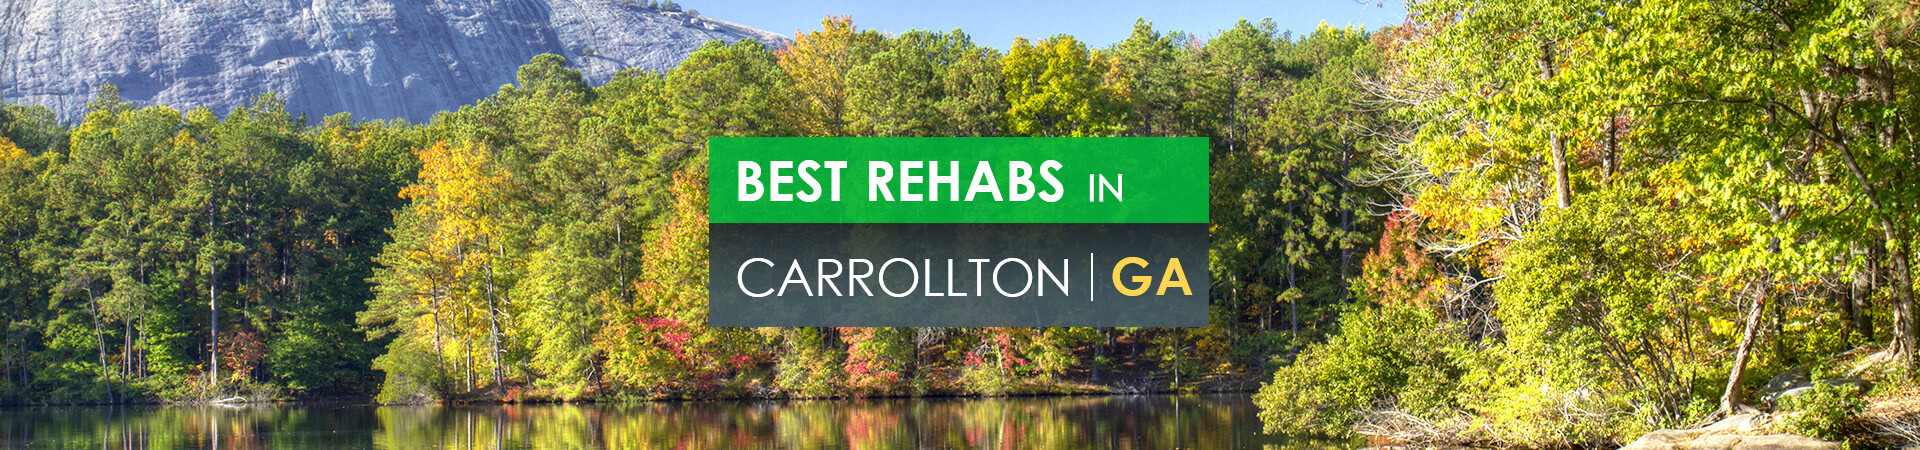 Best rehabs in Carrollton, GA